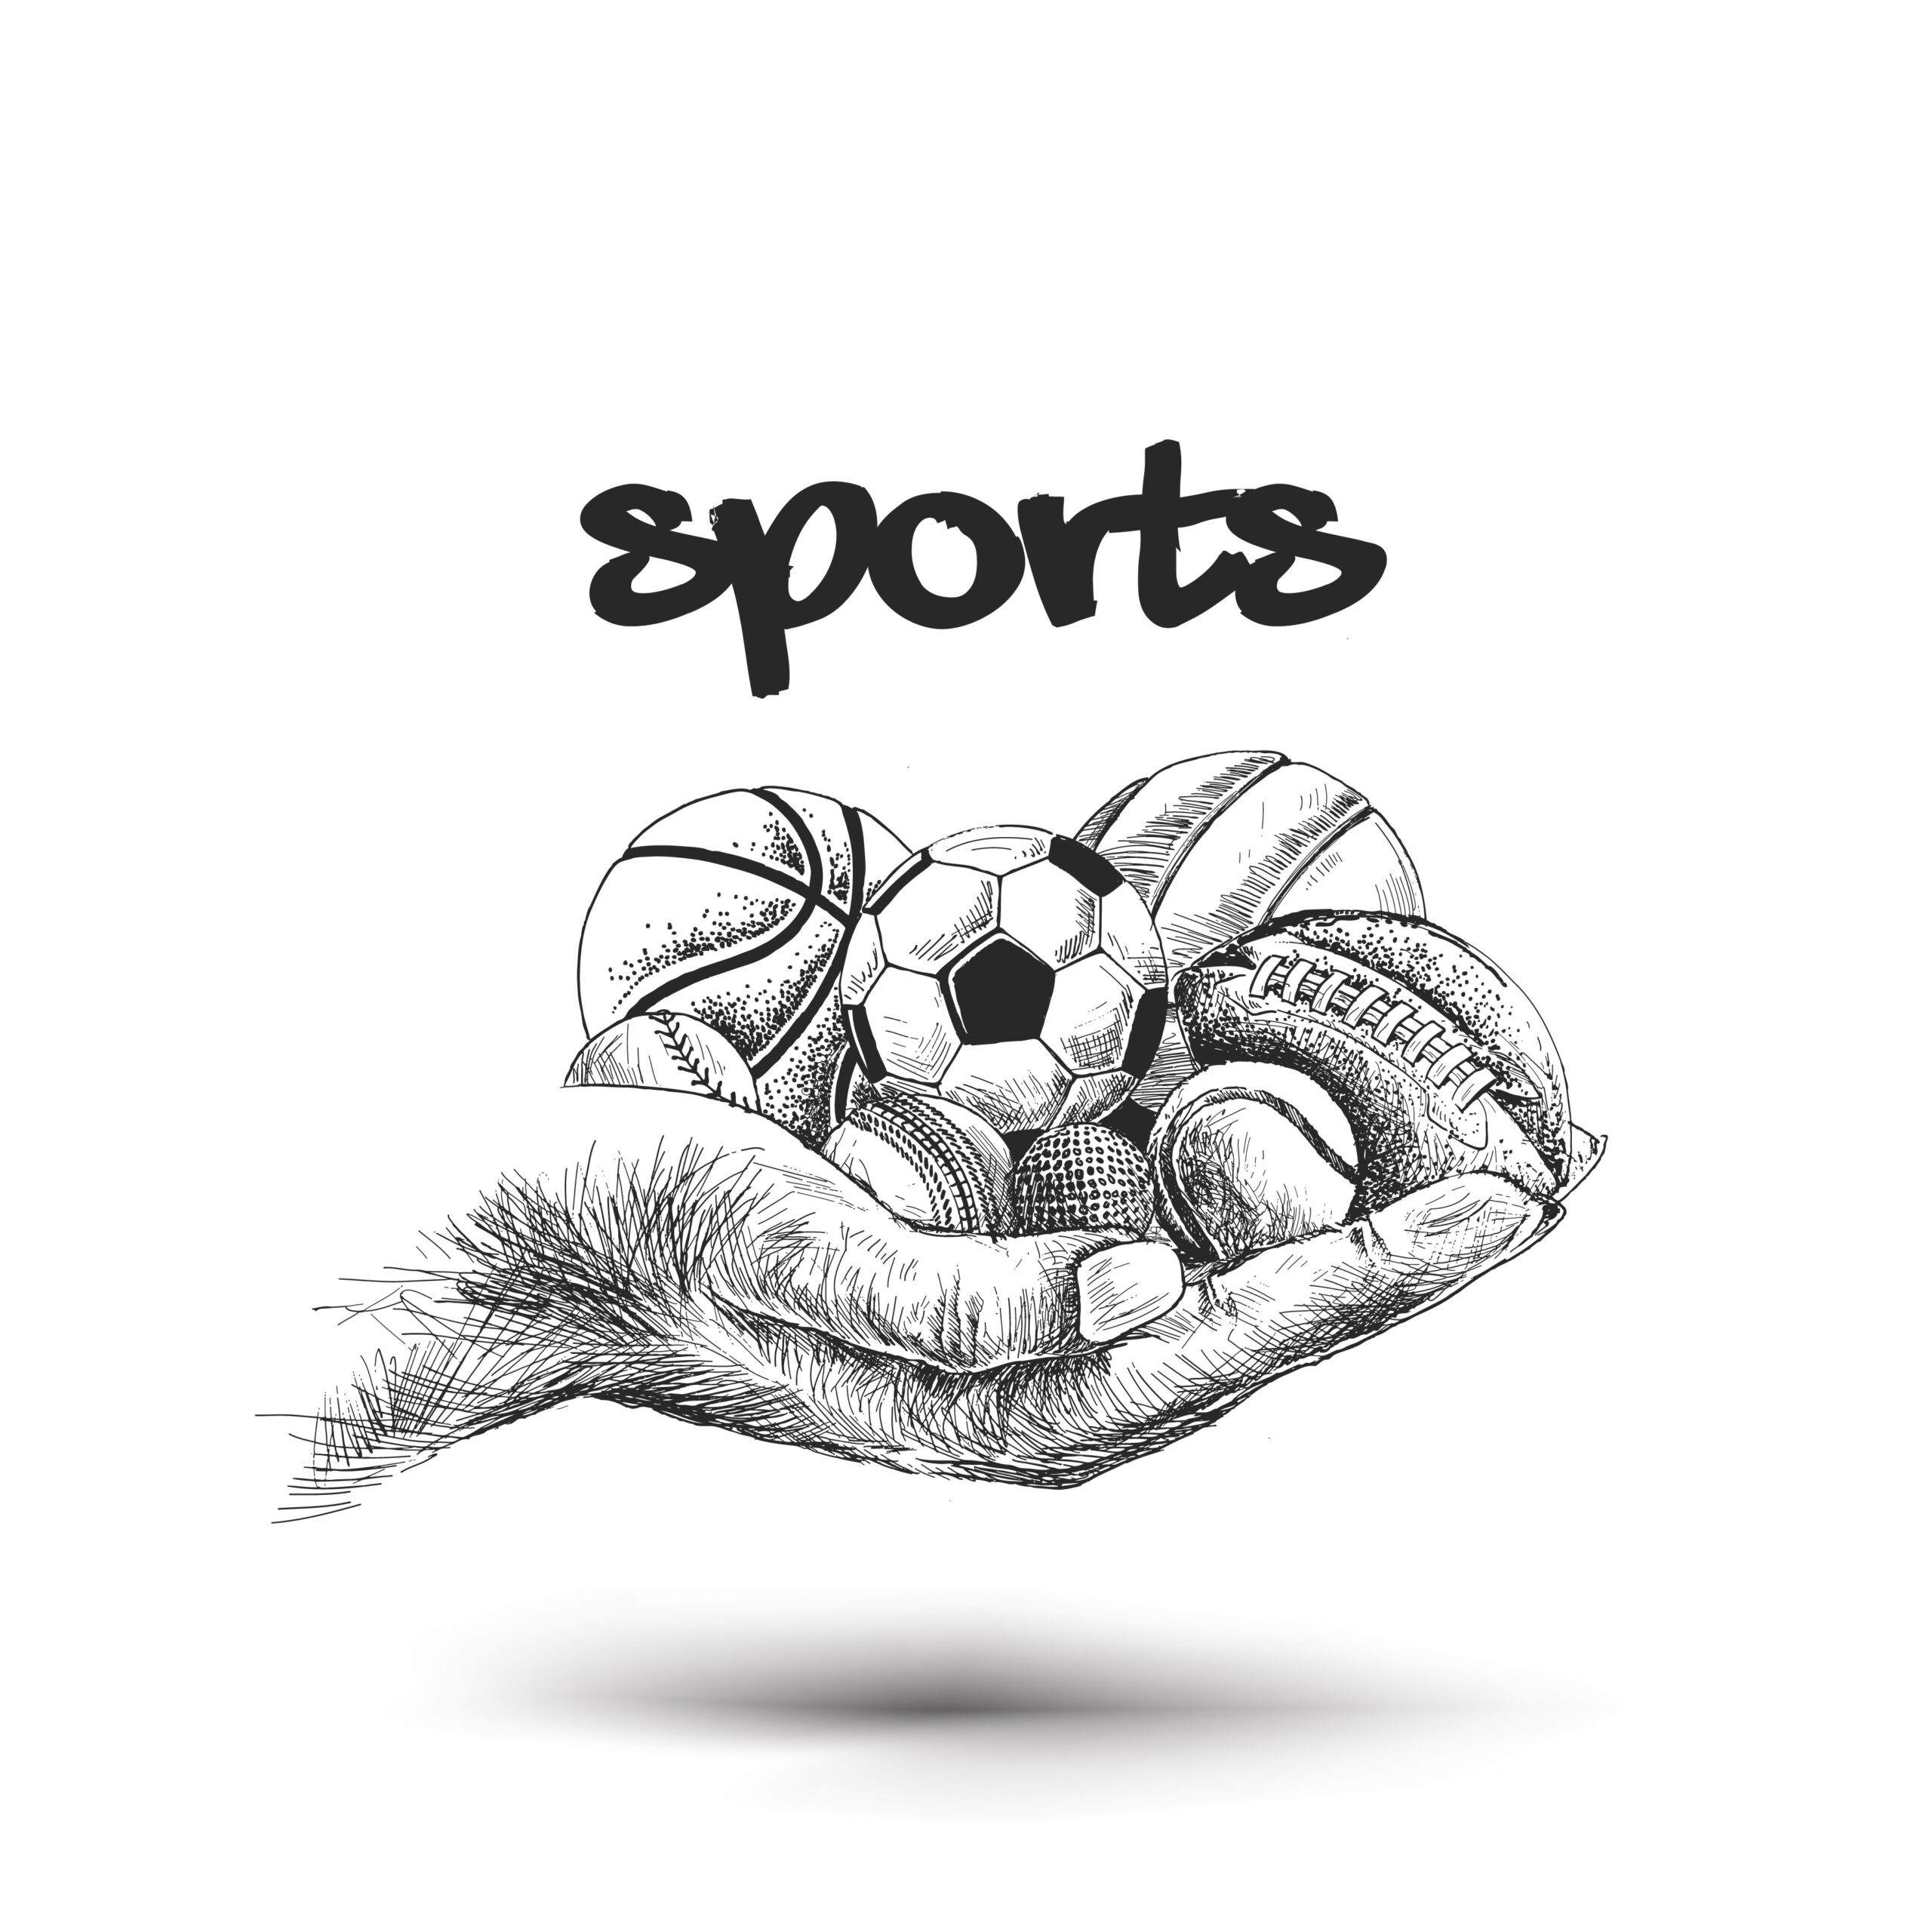 506 Sports